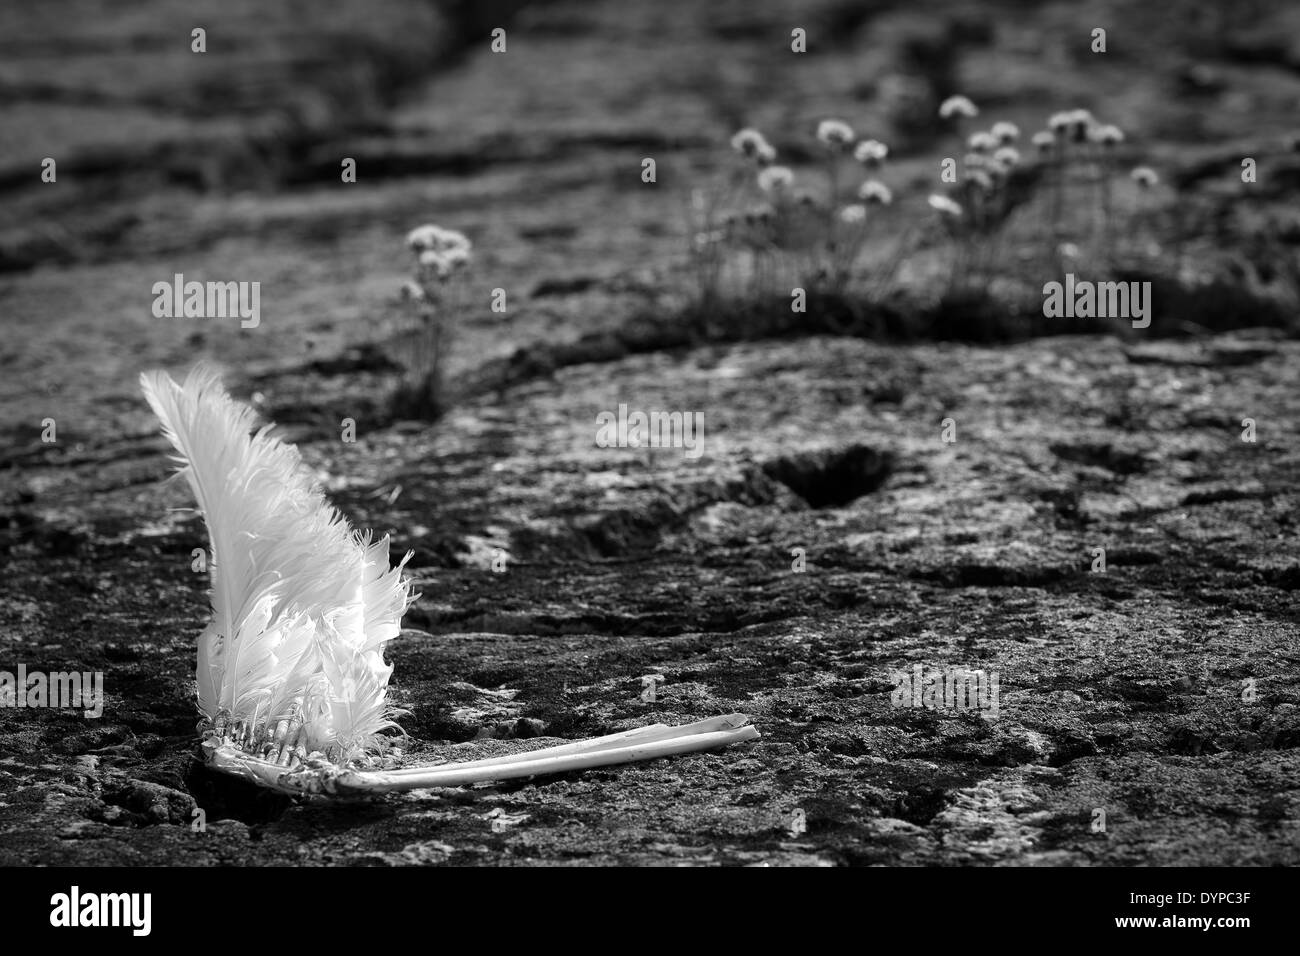 A wing of an seagull on a remote small island shore, Kirkkonummi, Finland, EU Stock Photo